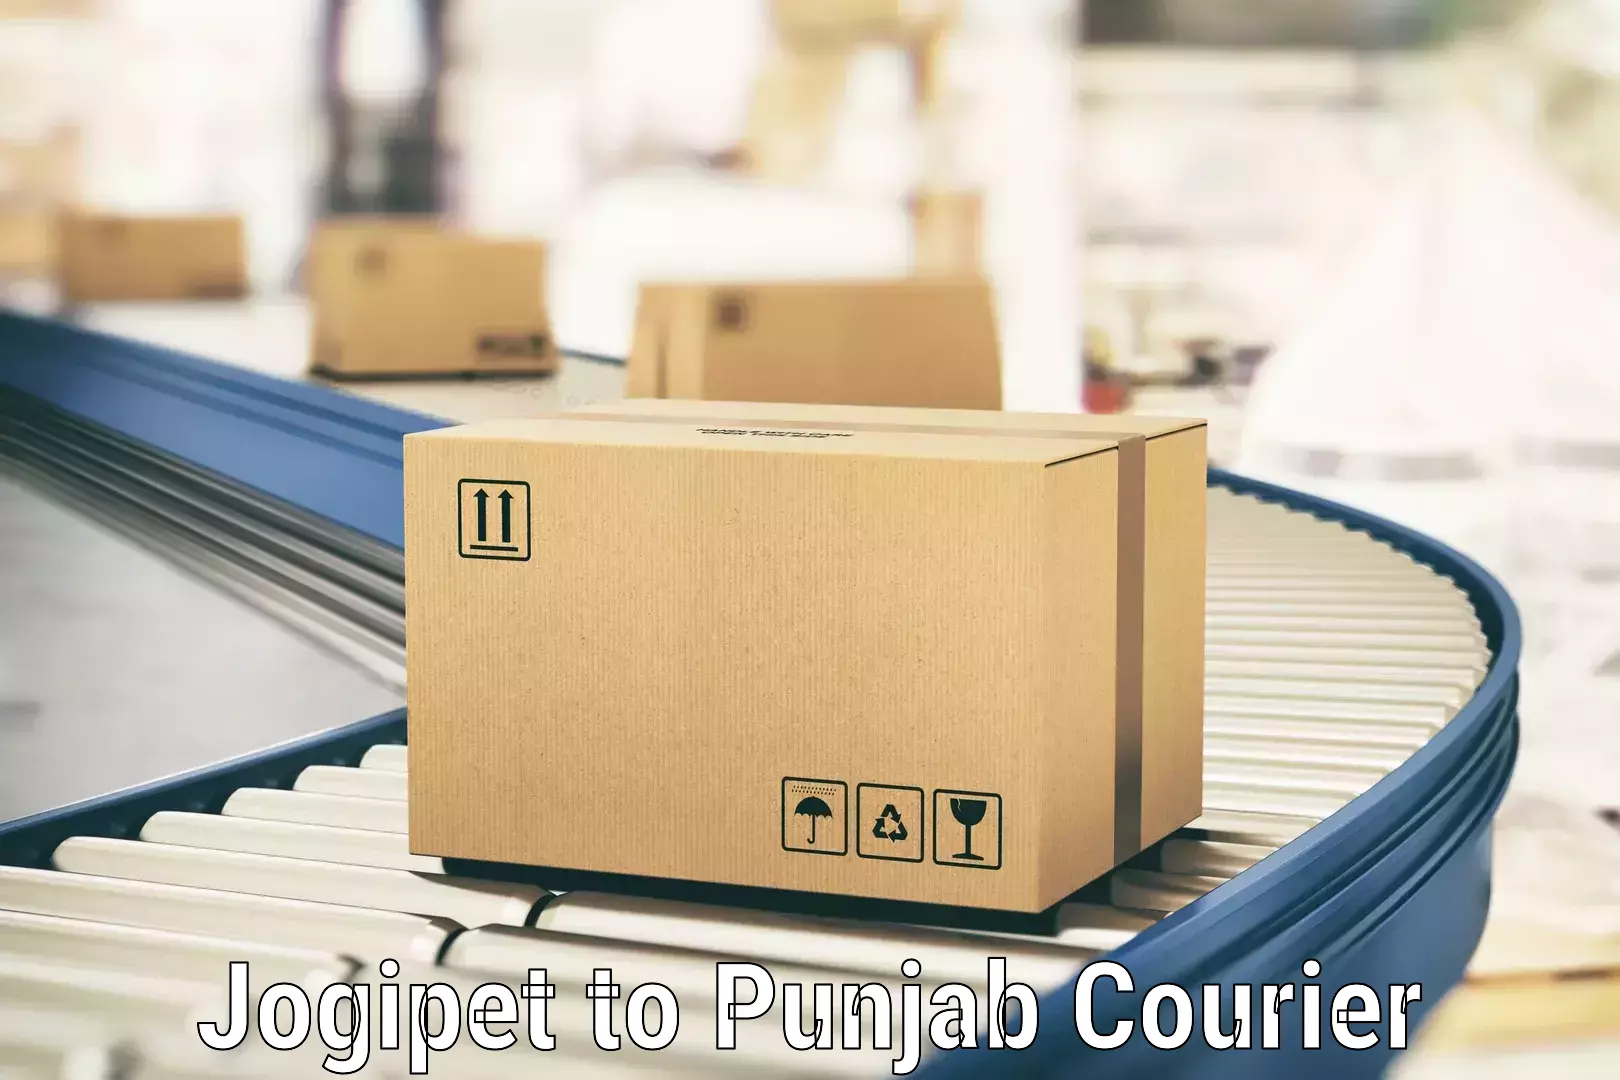 Reliable package handling Jogipet to Punjab